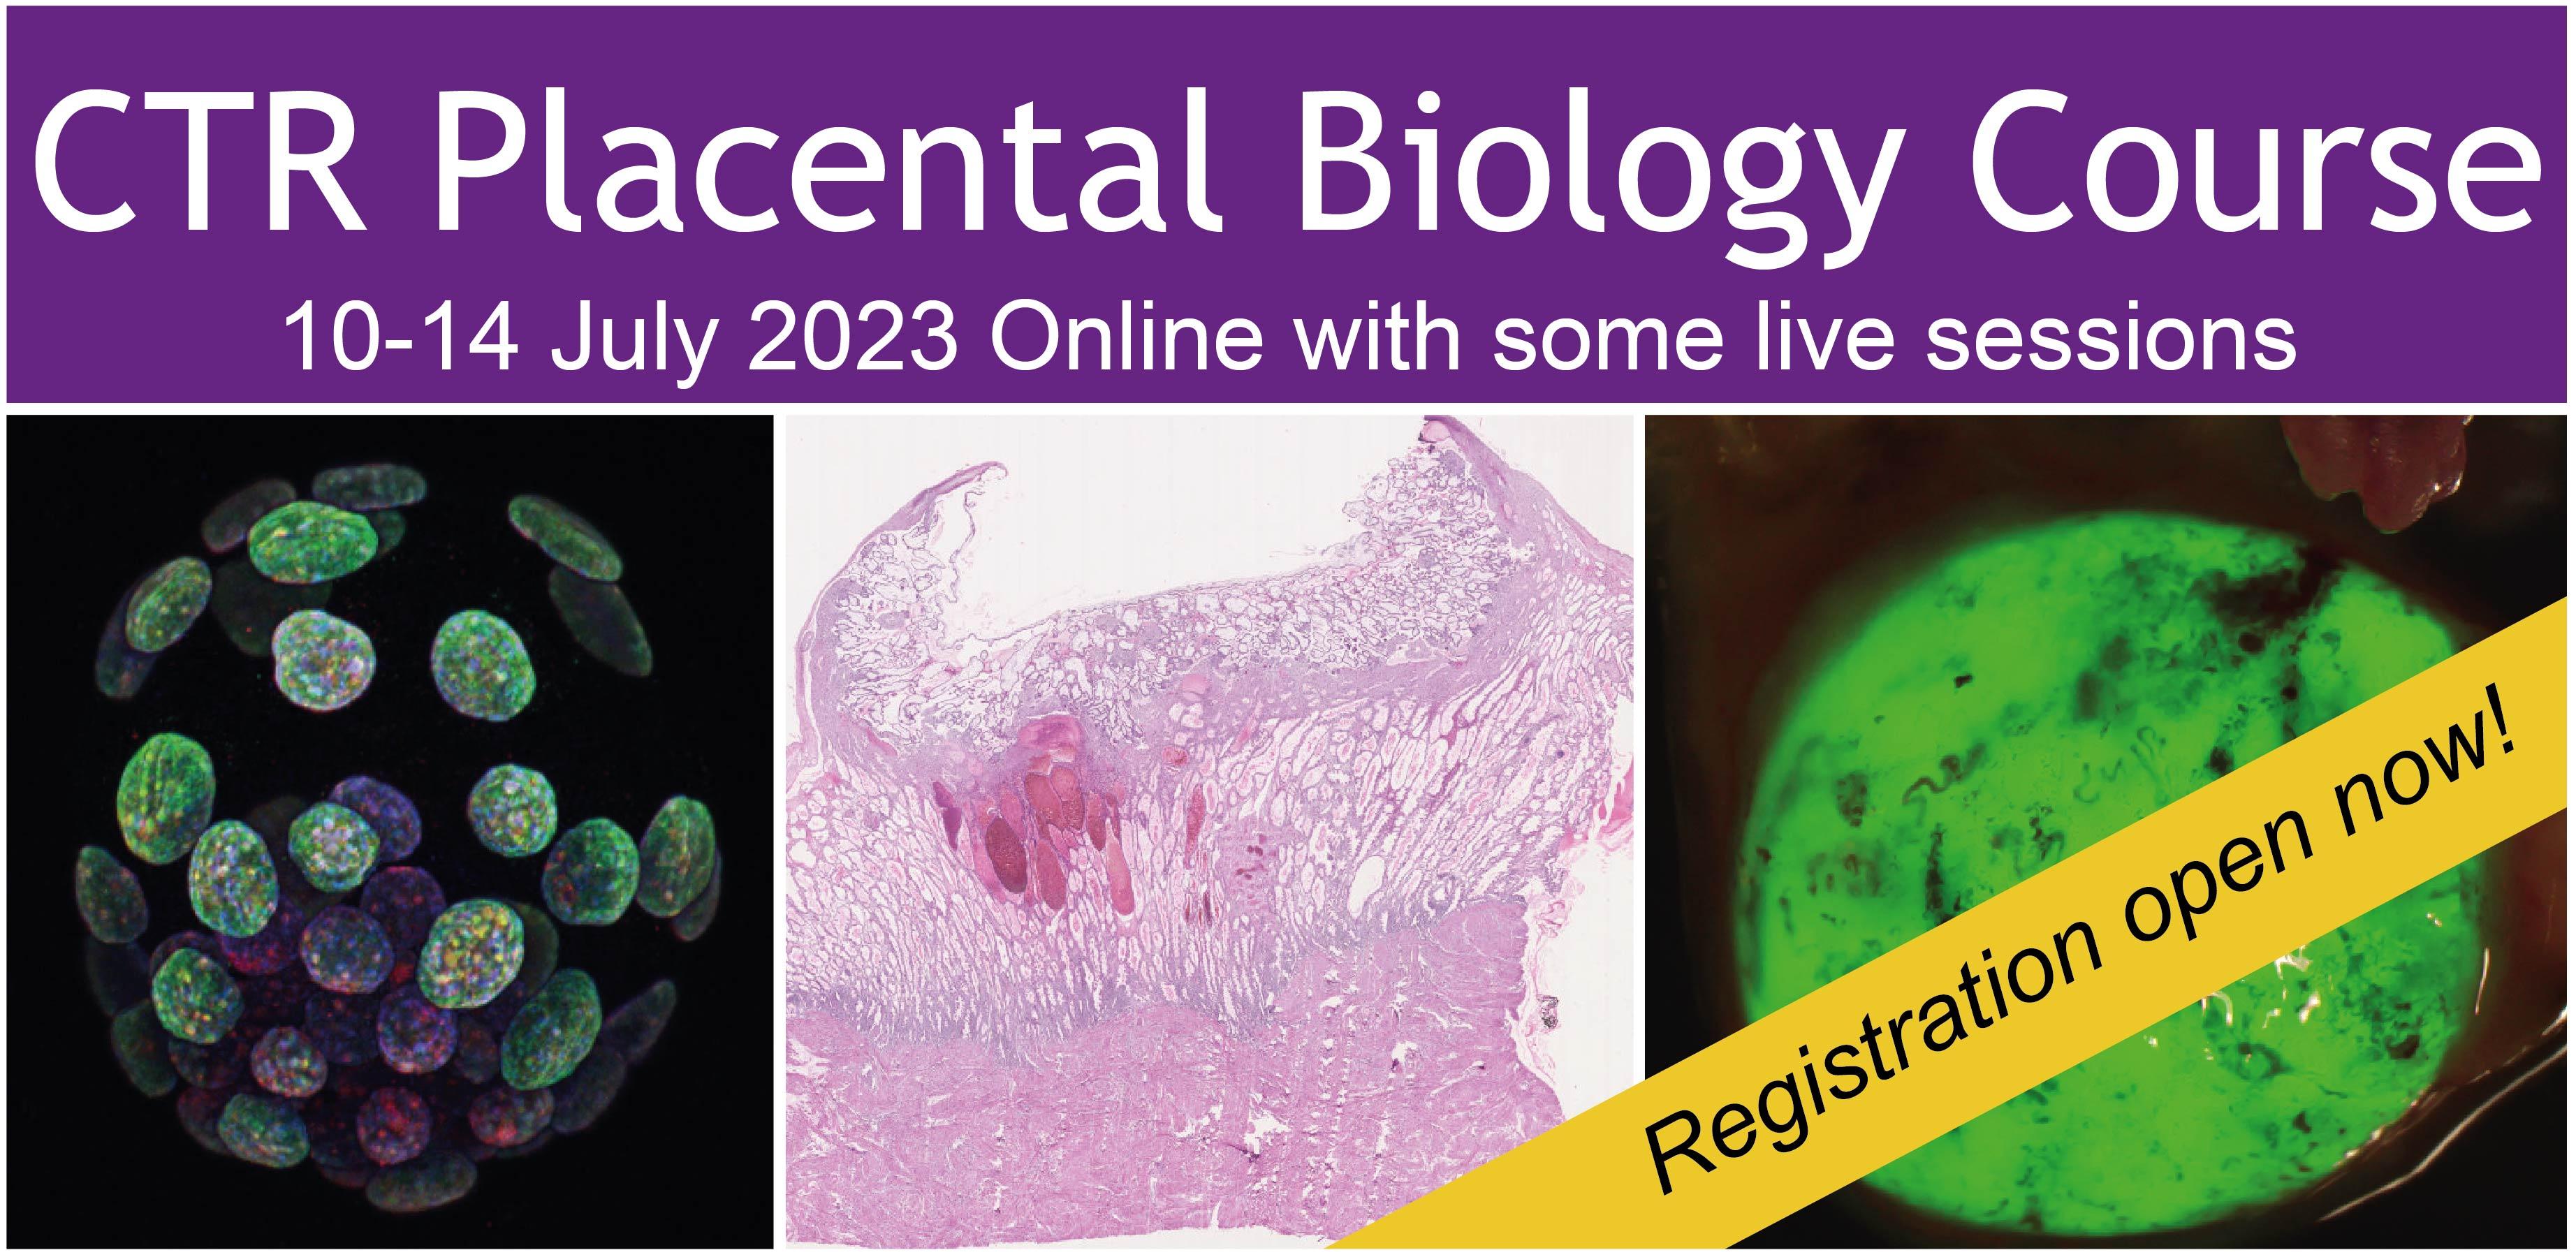 Placental Biology Course 2023